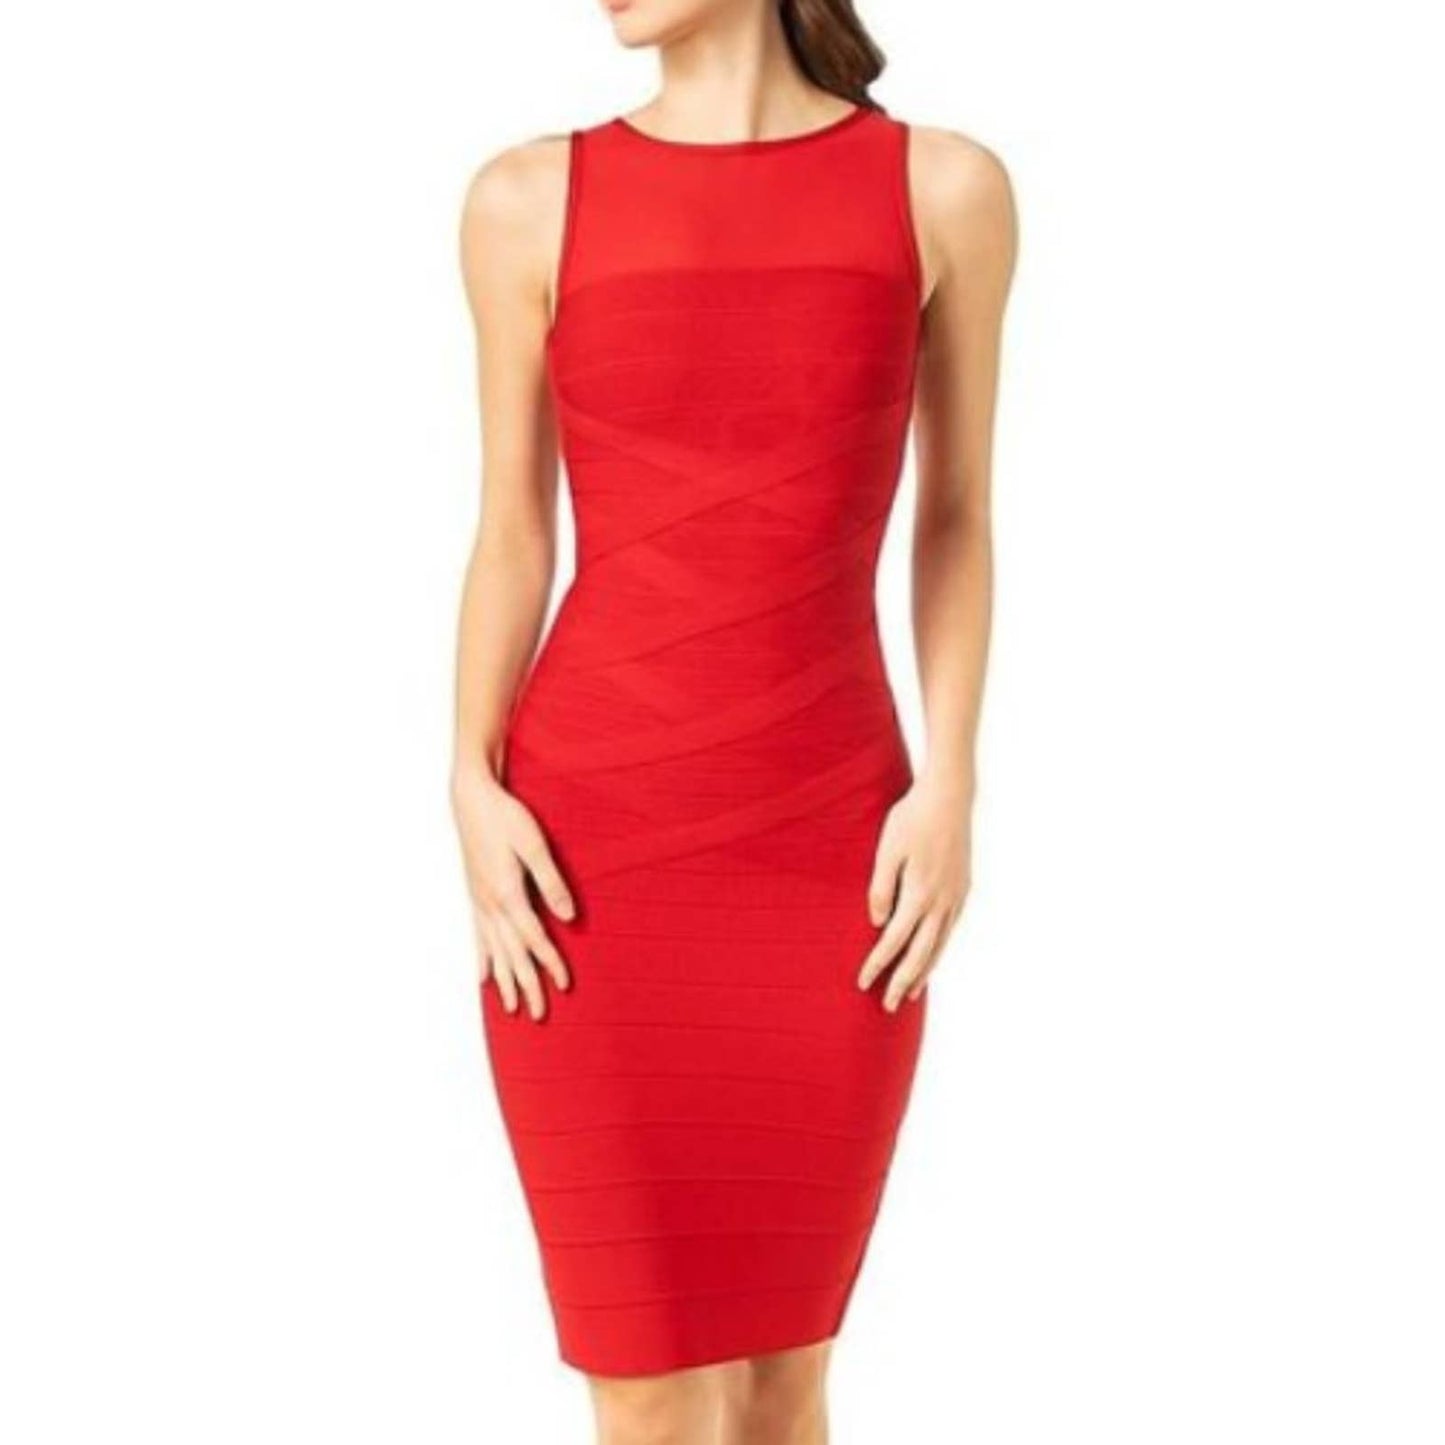 Dress The Population Ximena Red Rouge Bandage Dress NWOT Size Small